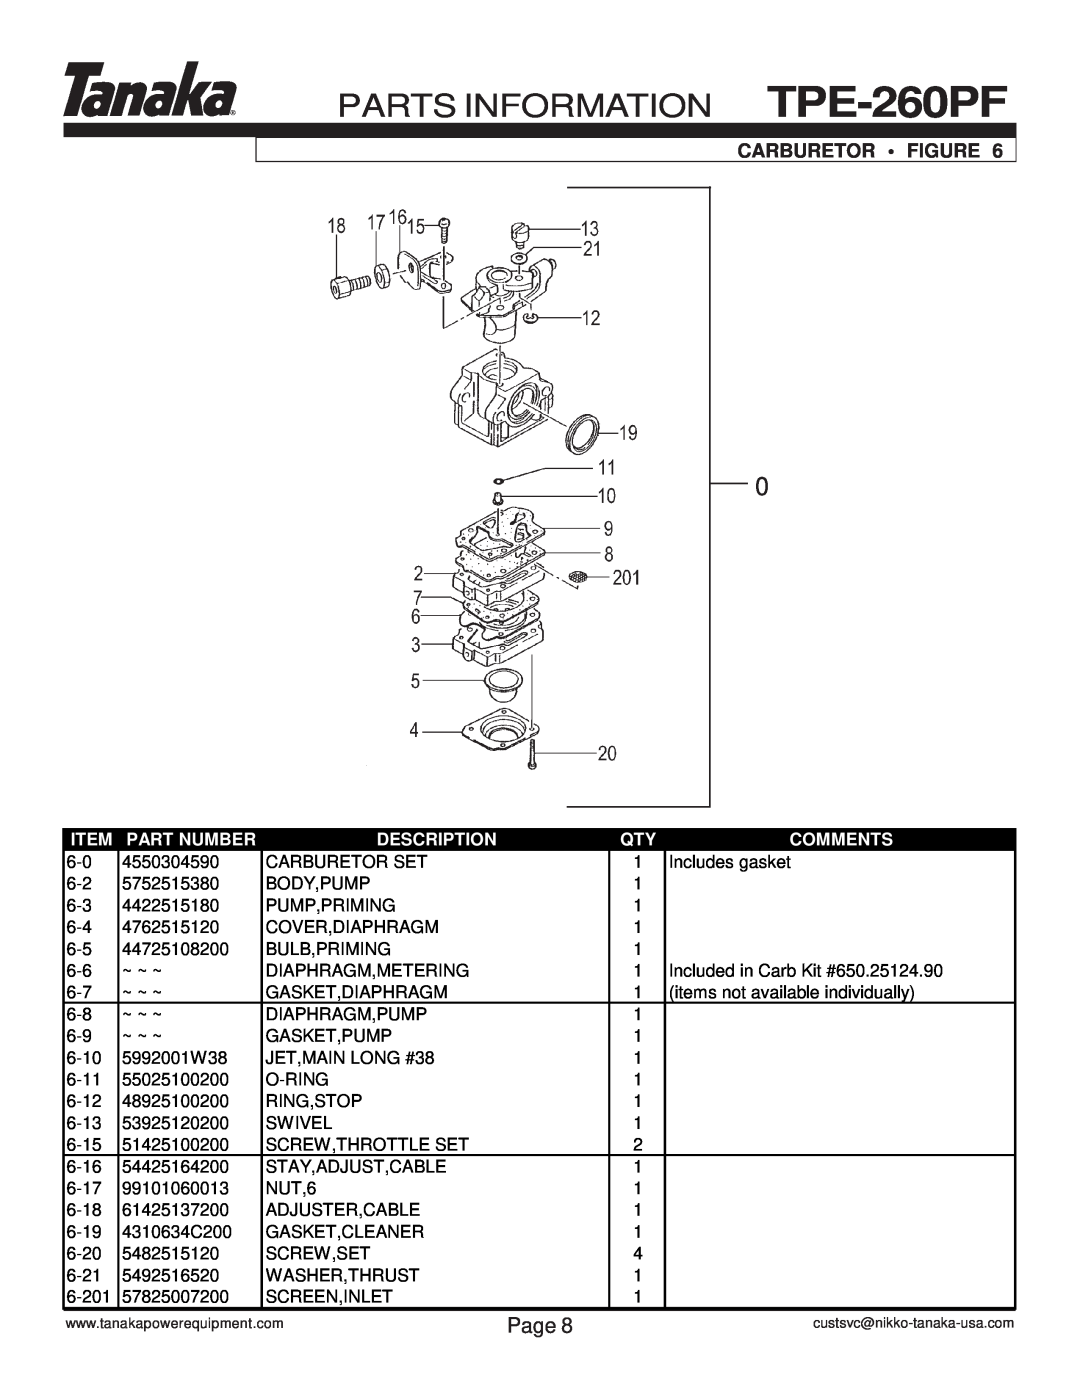 Tanaka manual PARTS INFORMATION TPE-260PF, Carburetor Figure, Page, Part Number, Description, Comments 